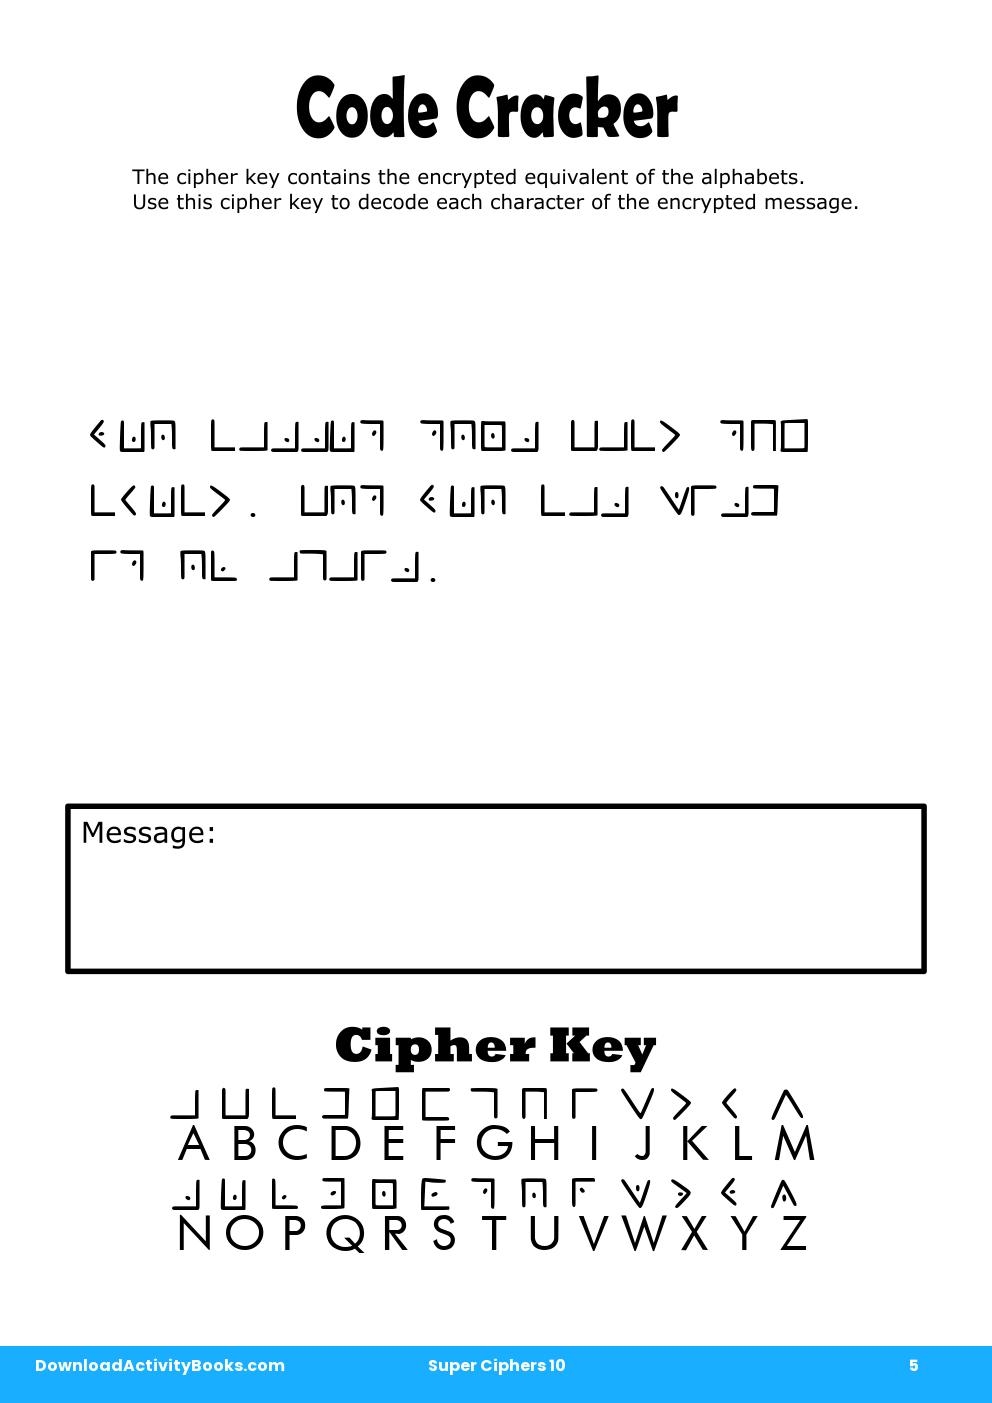 Code Cracker in Super Ciphers 10